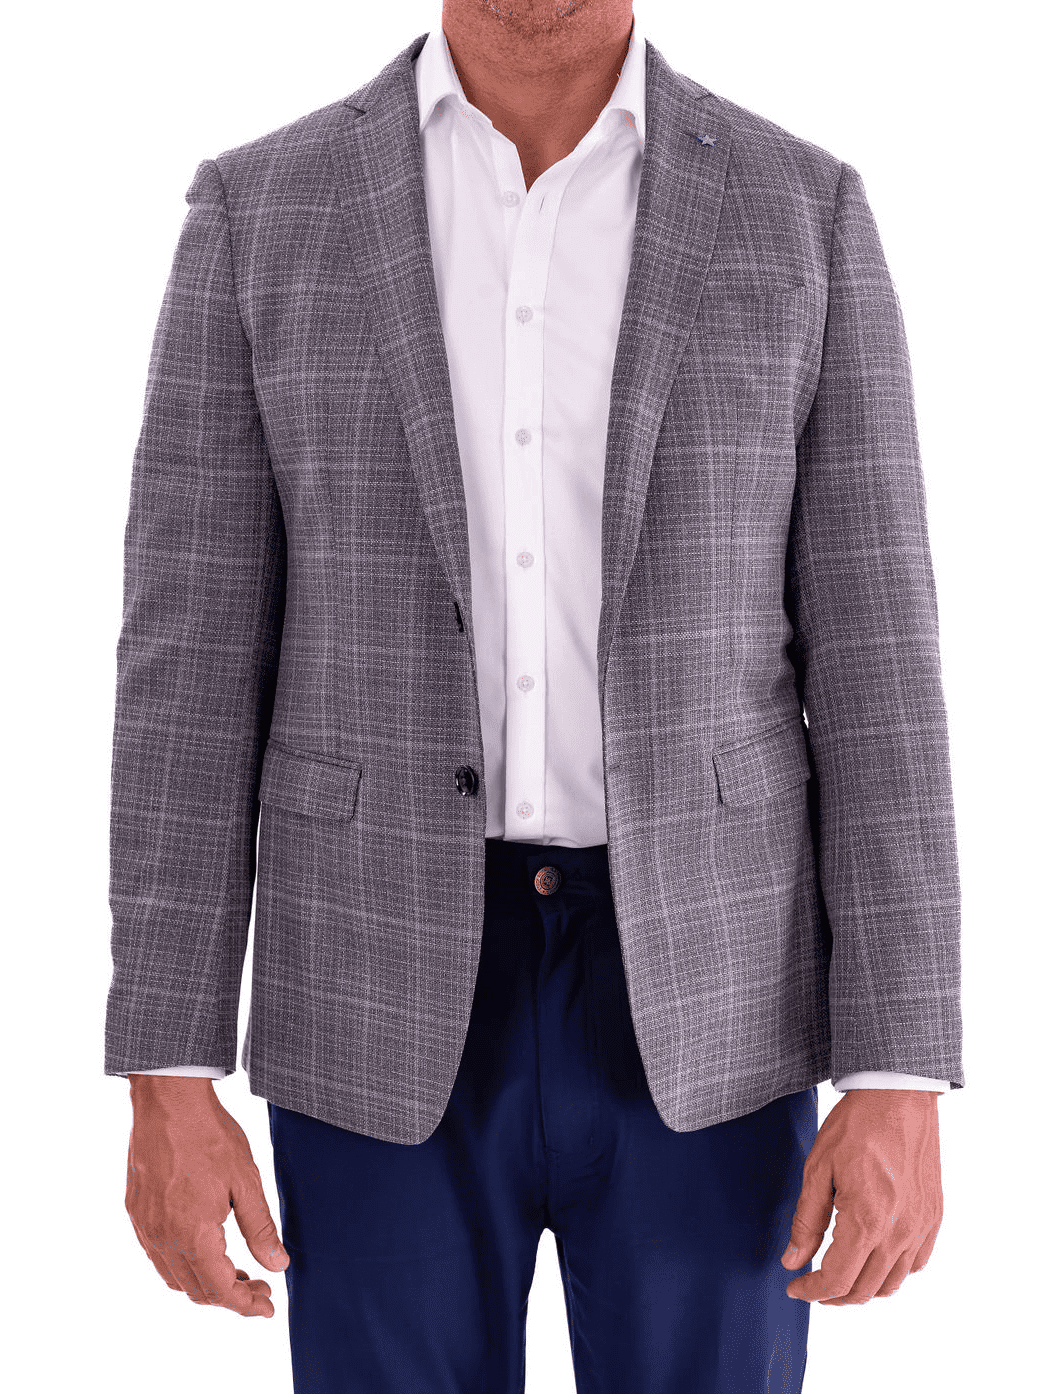 Trussini Men's Grey/ Black/ White Wool Suit Jacket Sport Coats & Blazer -  44 US / 54 EU - Walmart.com